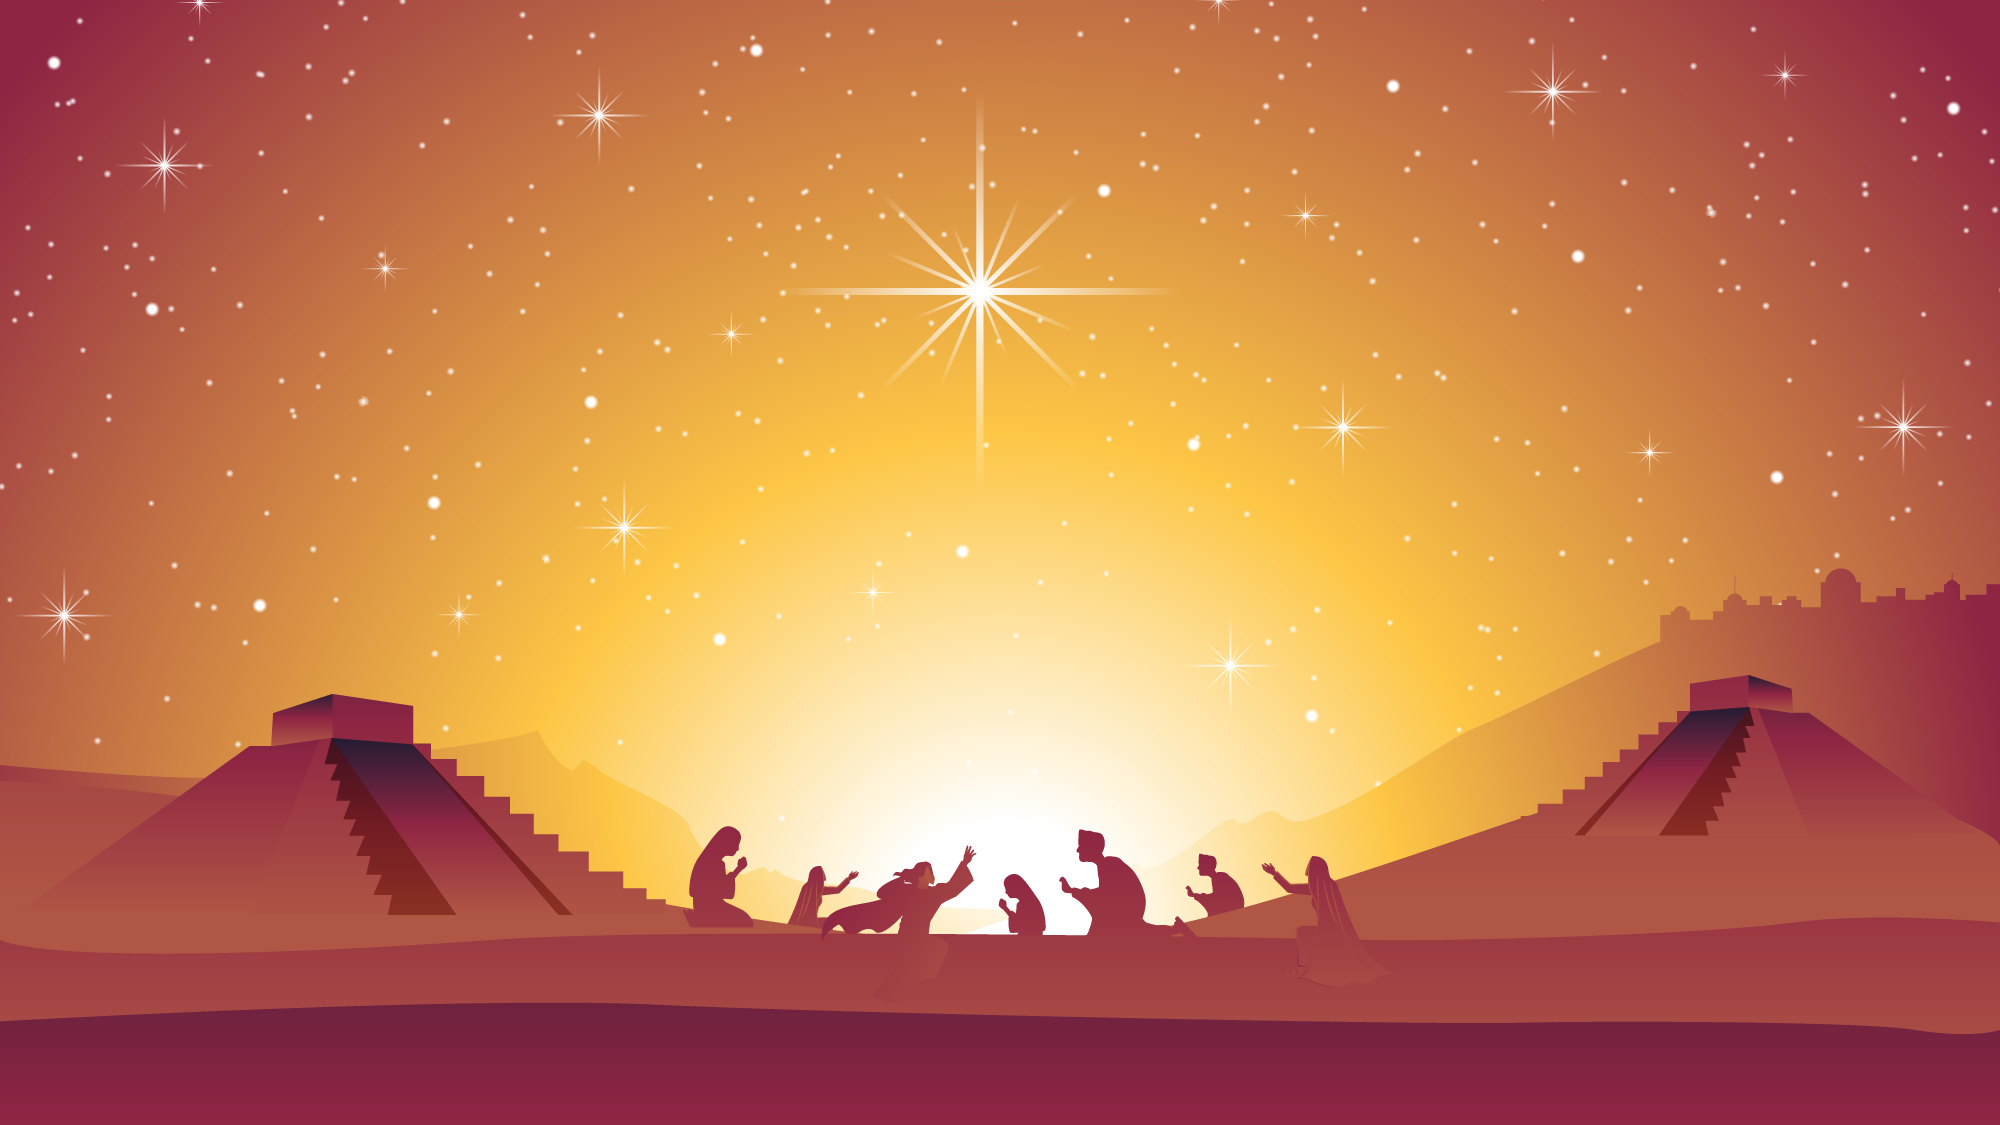 when was jesus actually born